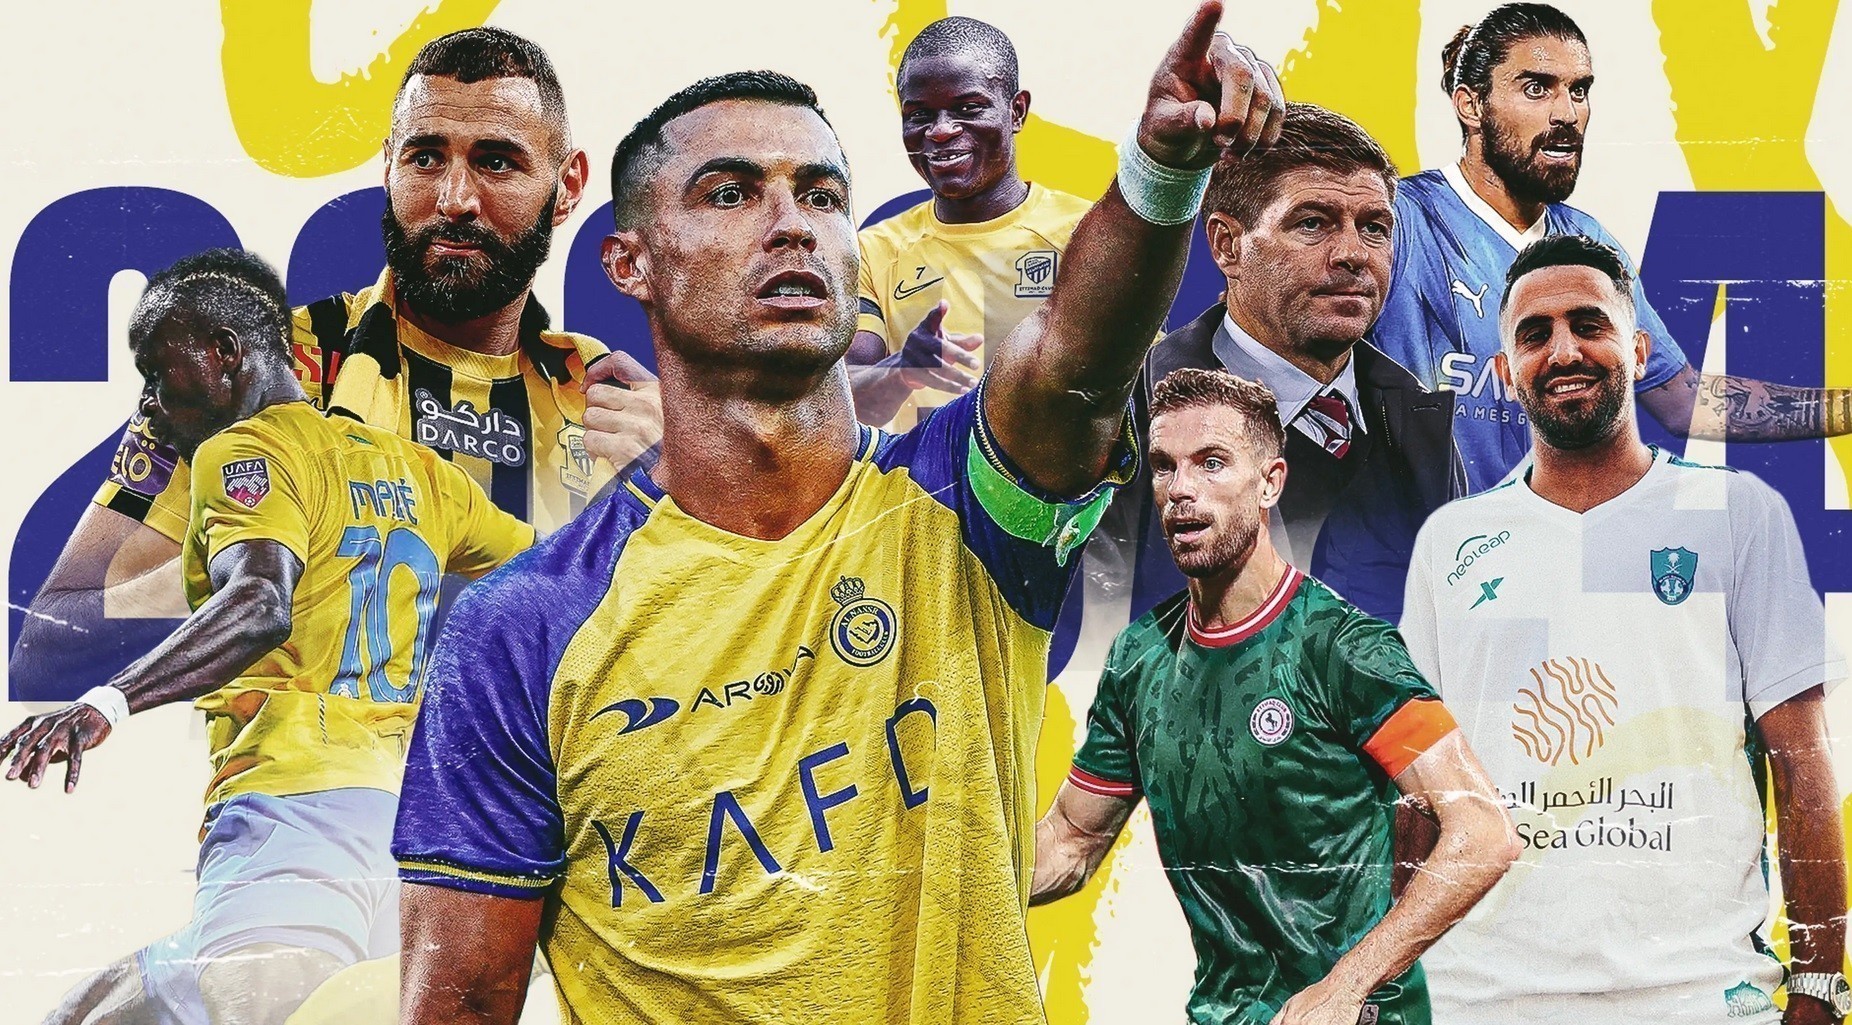 Saudi Pro League: Πώς σχεδιάζει να μετατραπεί σε ένα από τα μεγαλύτερα πρωταθλήματα του κόσμου